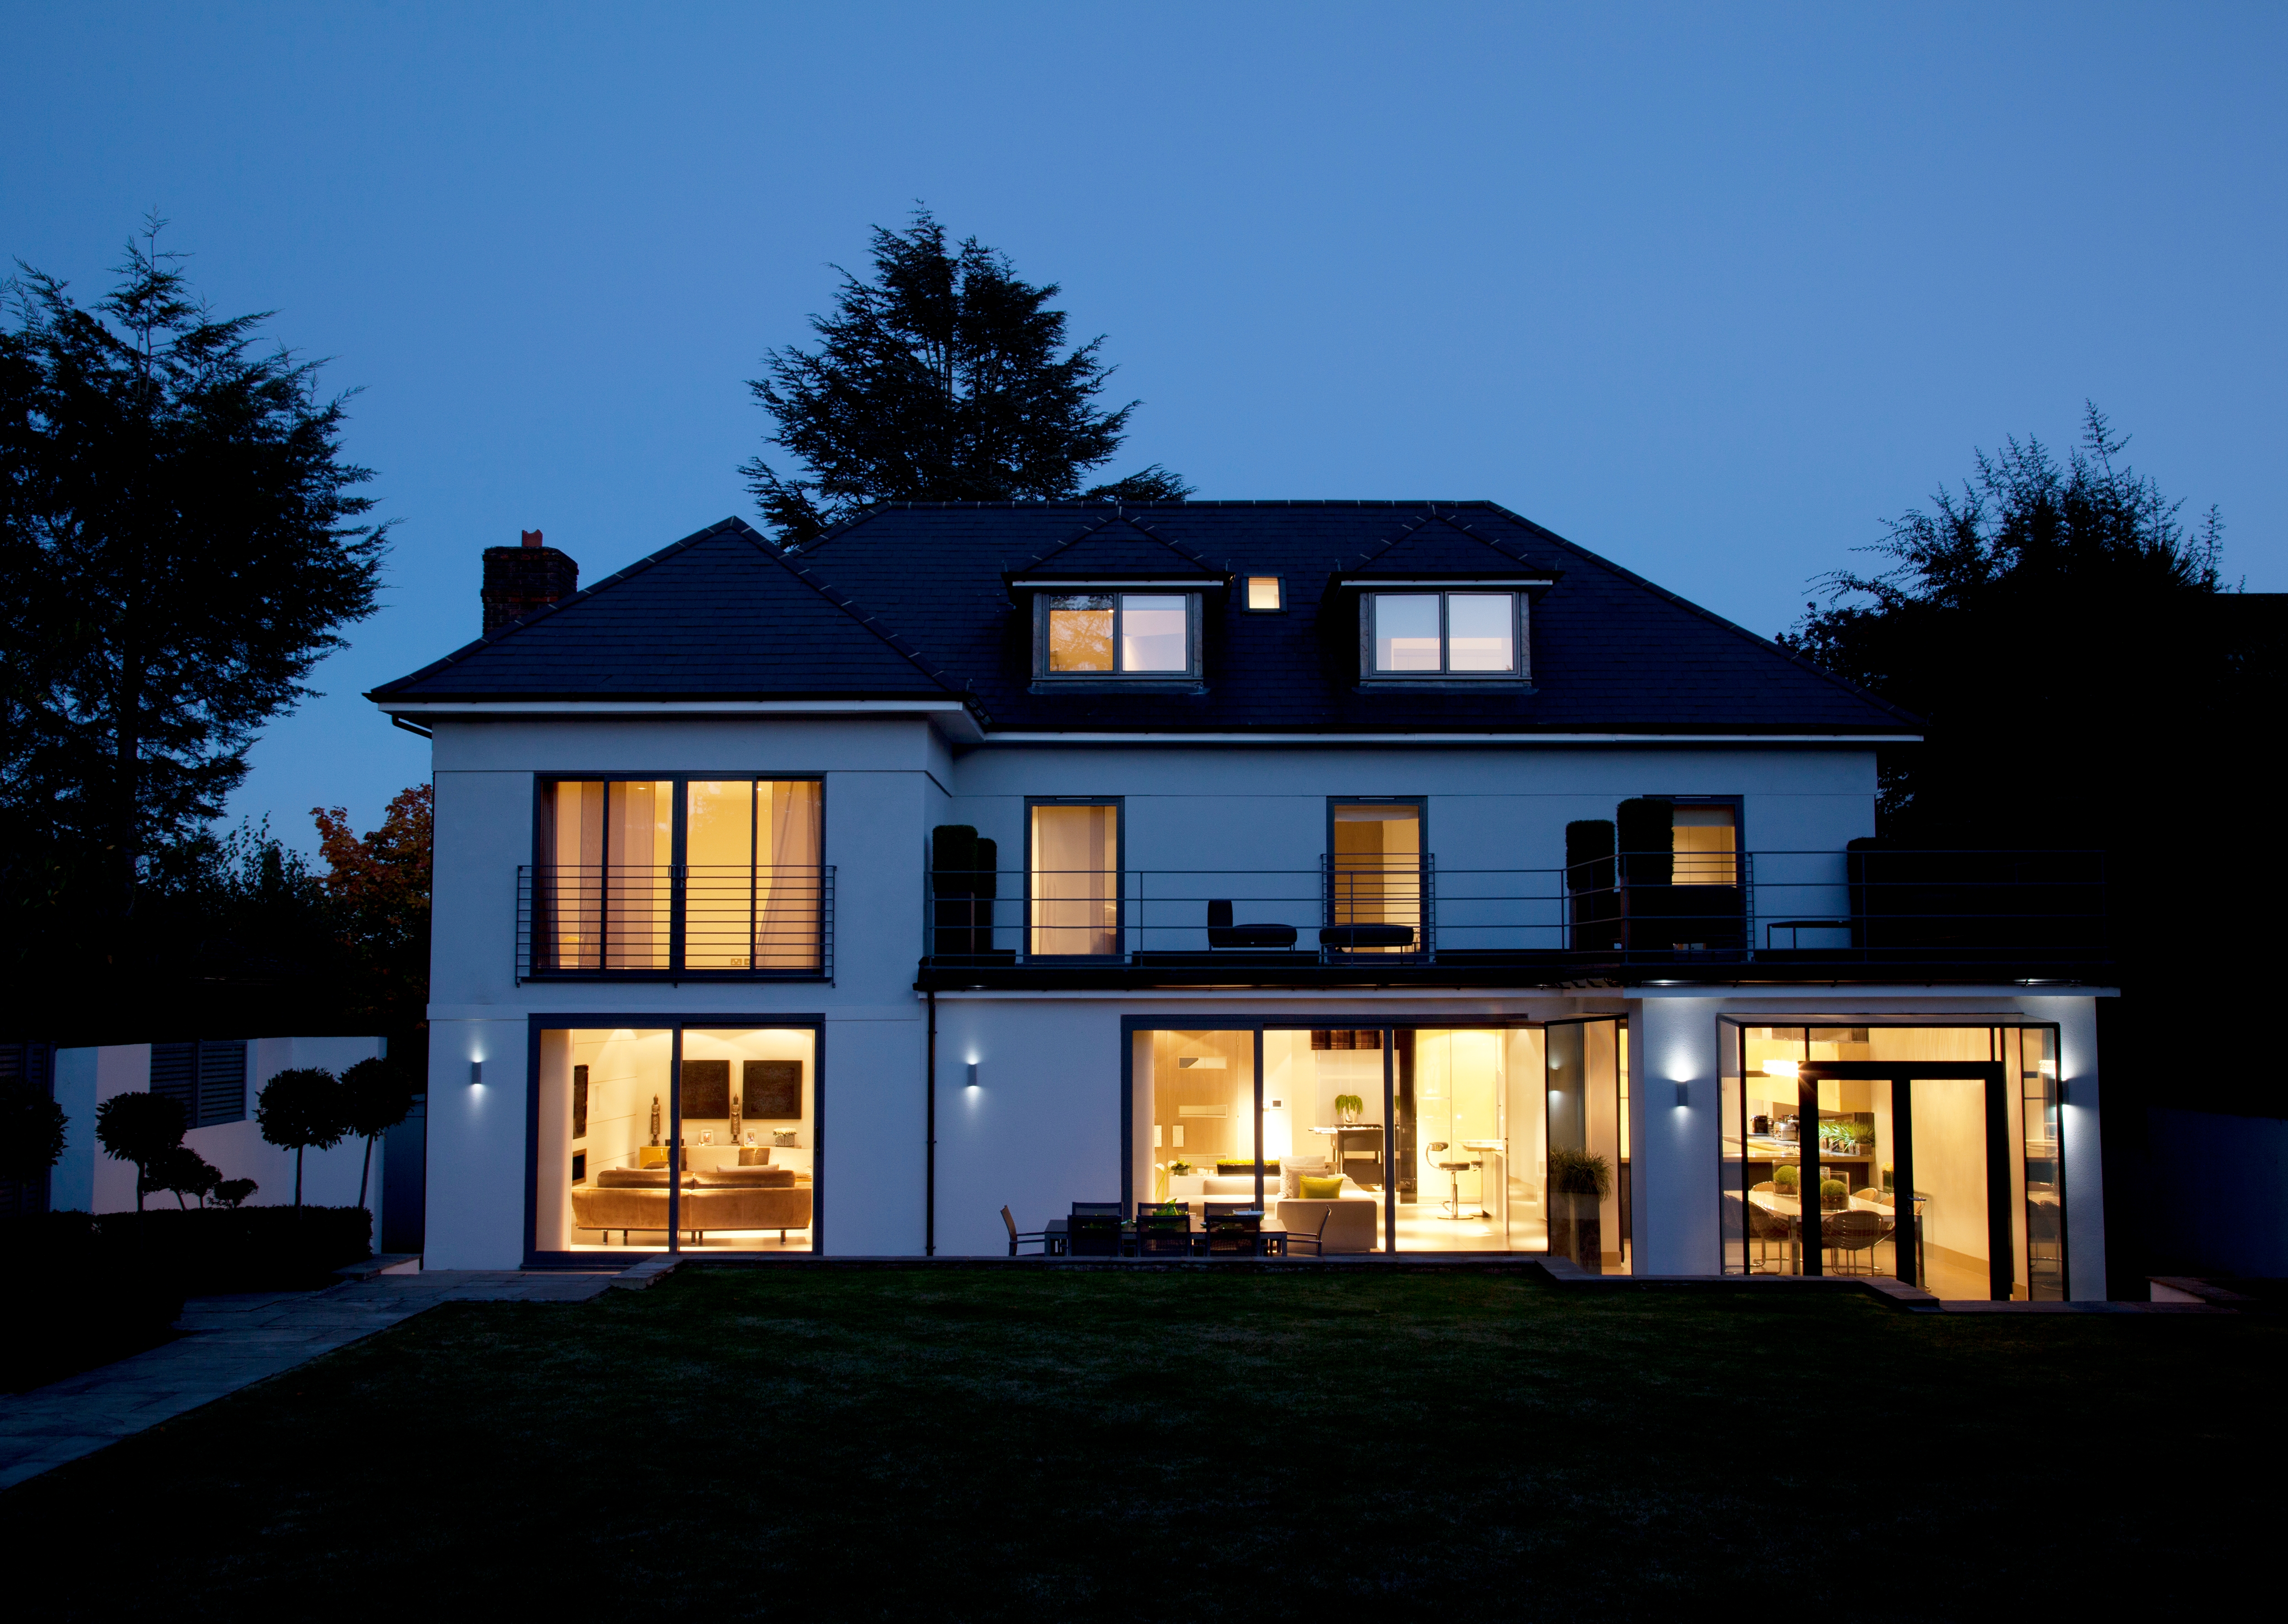 Modern house illuminated at night. | Source: Shutterstock